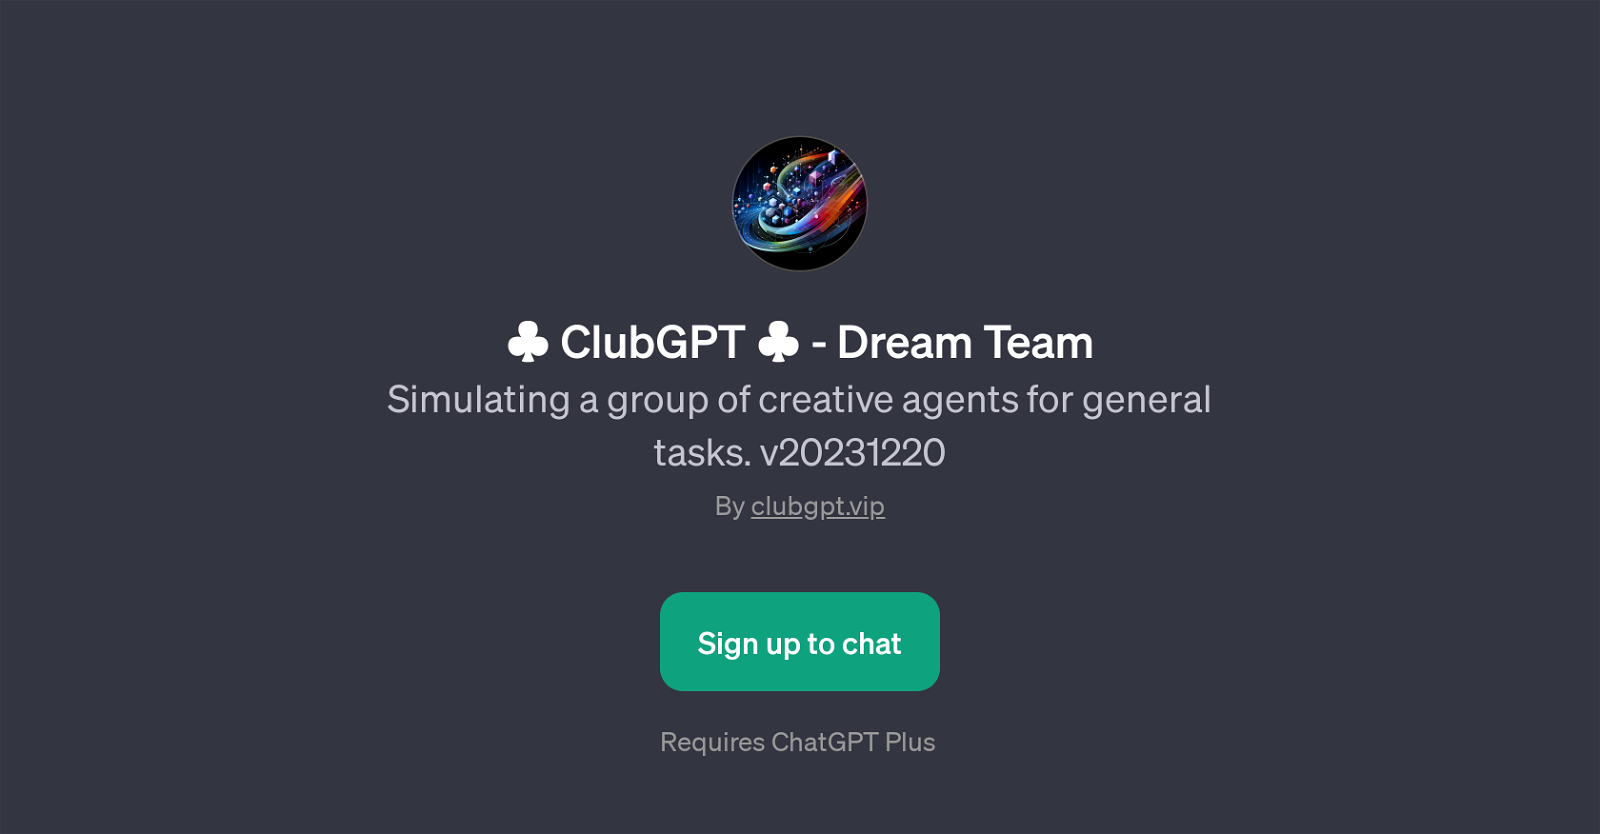 ClubGPT - Dream Team website